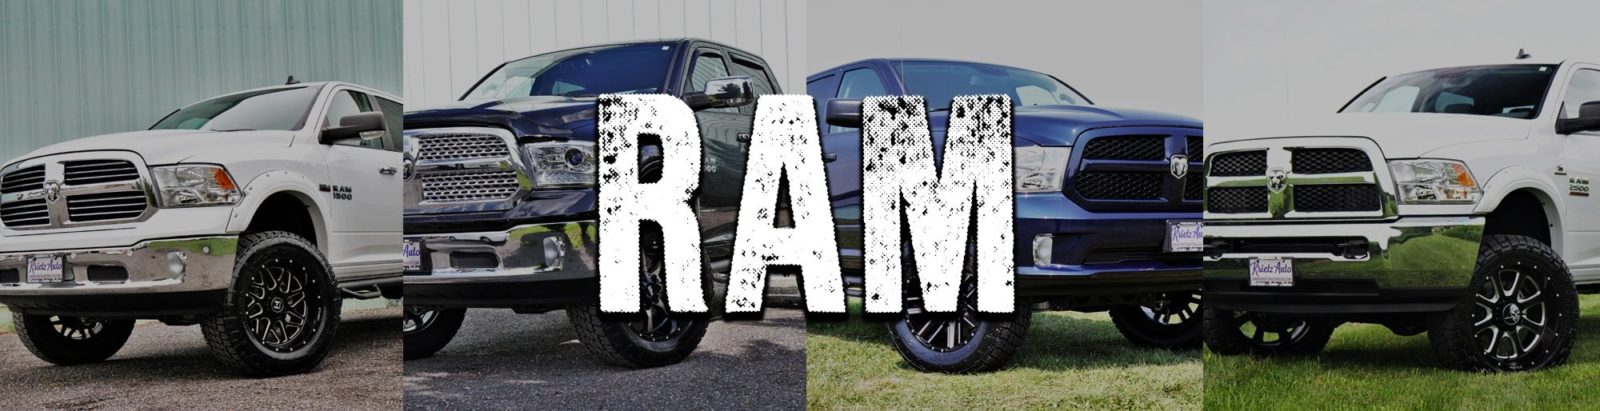 ram trucks